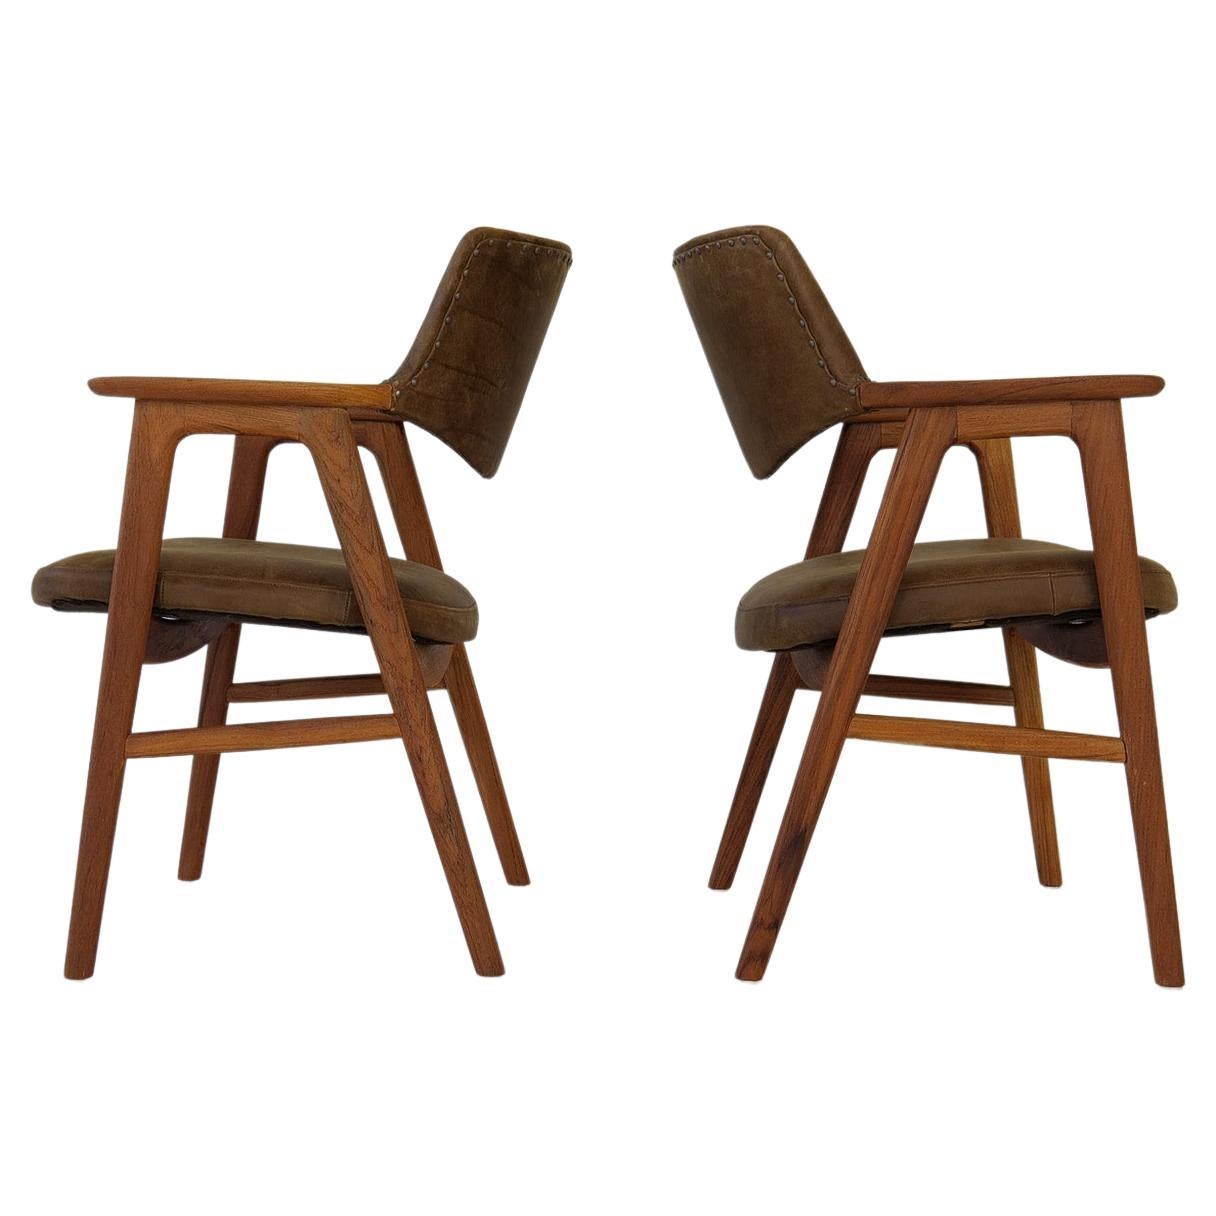 Midcentury Modern Erik Kirkegaard Danish Teak and Leather Desk Chairs, 1960s For Sale